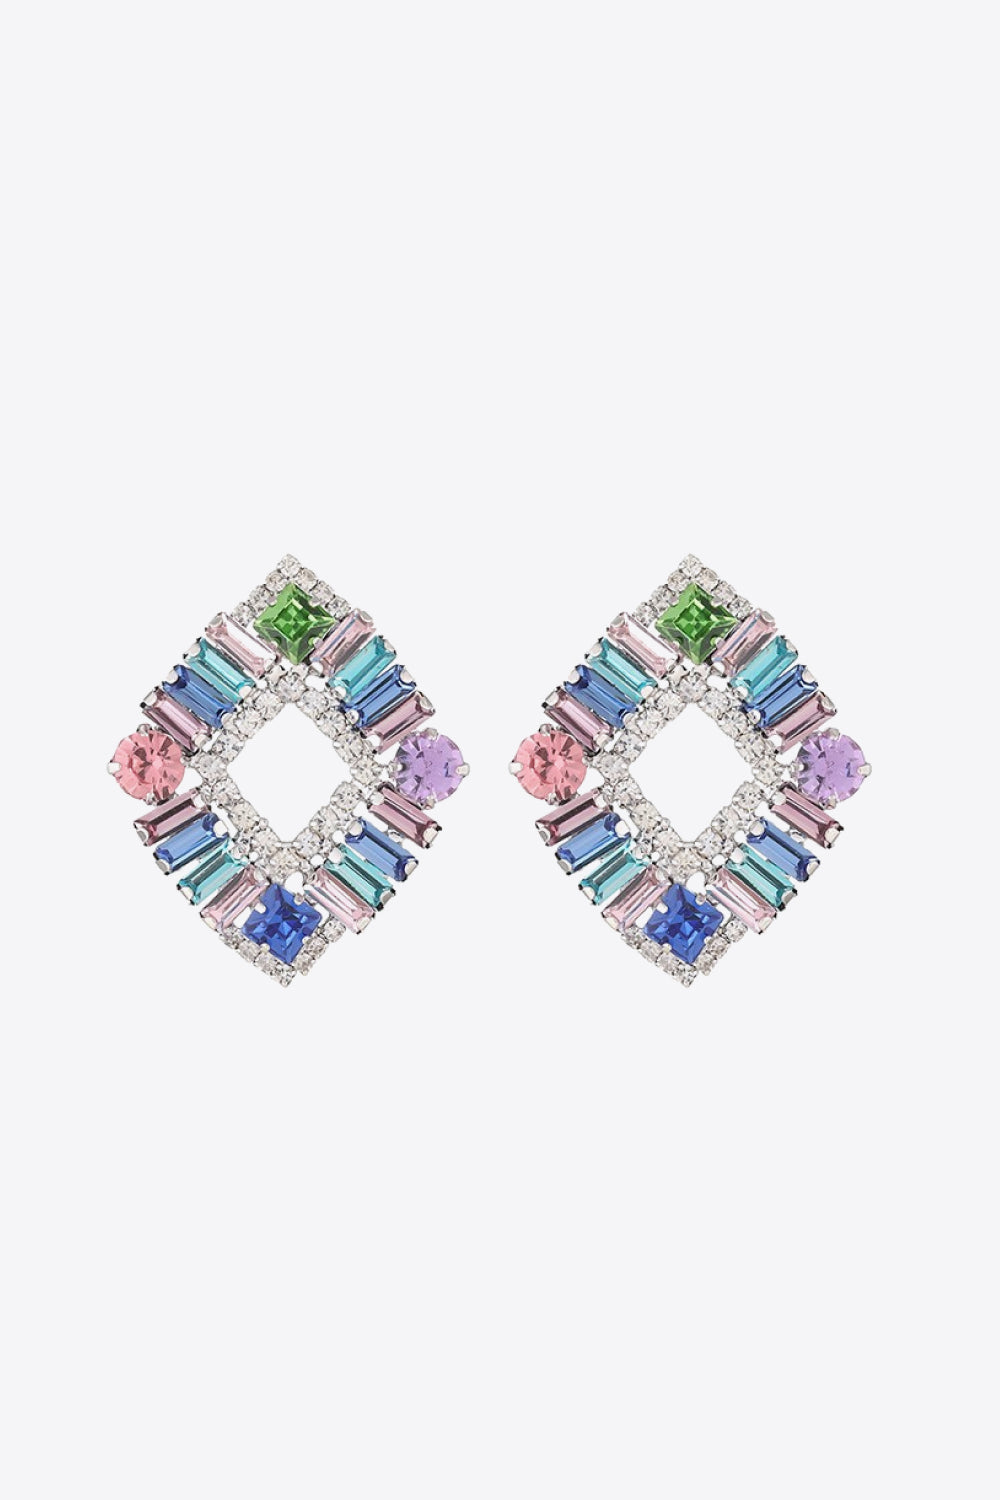 Multicolored Glass Stone Earrings - Earrings - FITGGINS